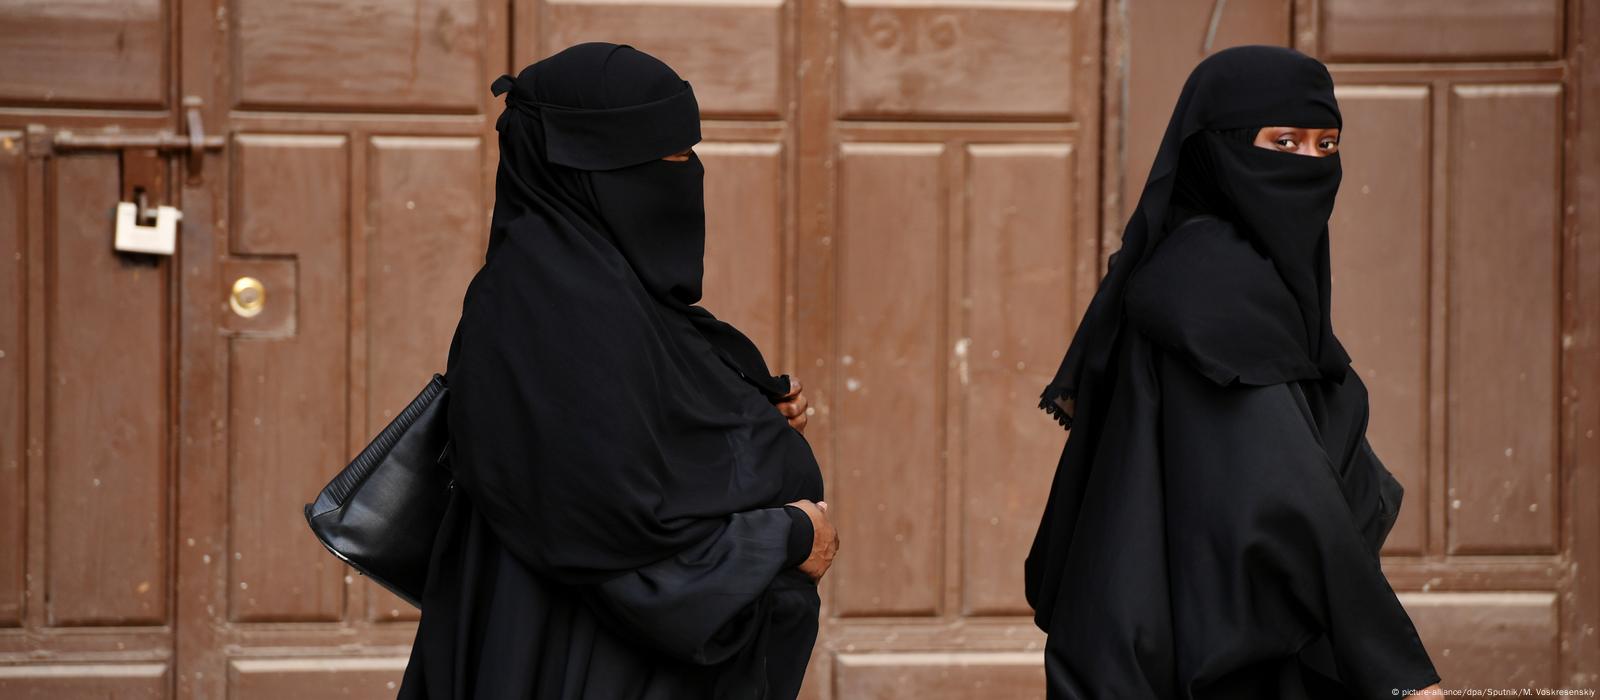 Saudi prince Women should decide what to wear – DW